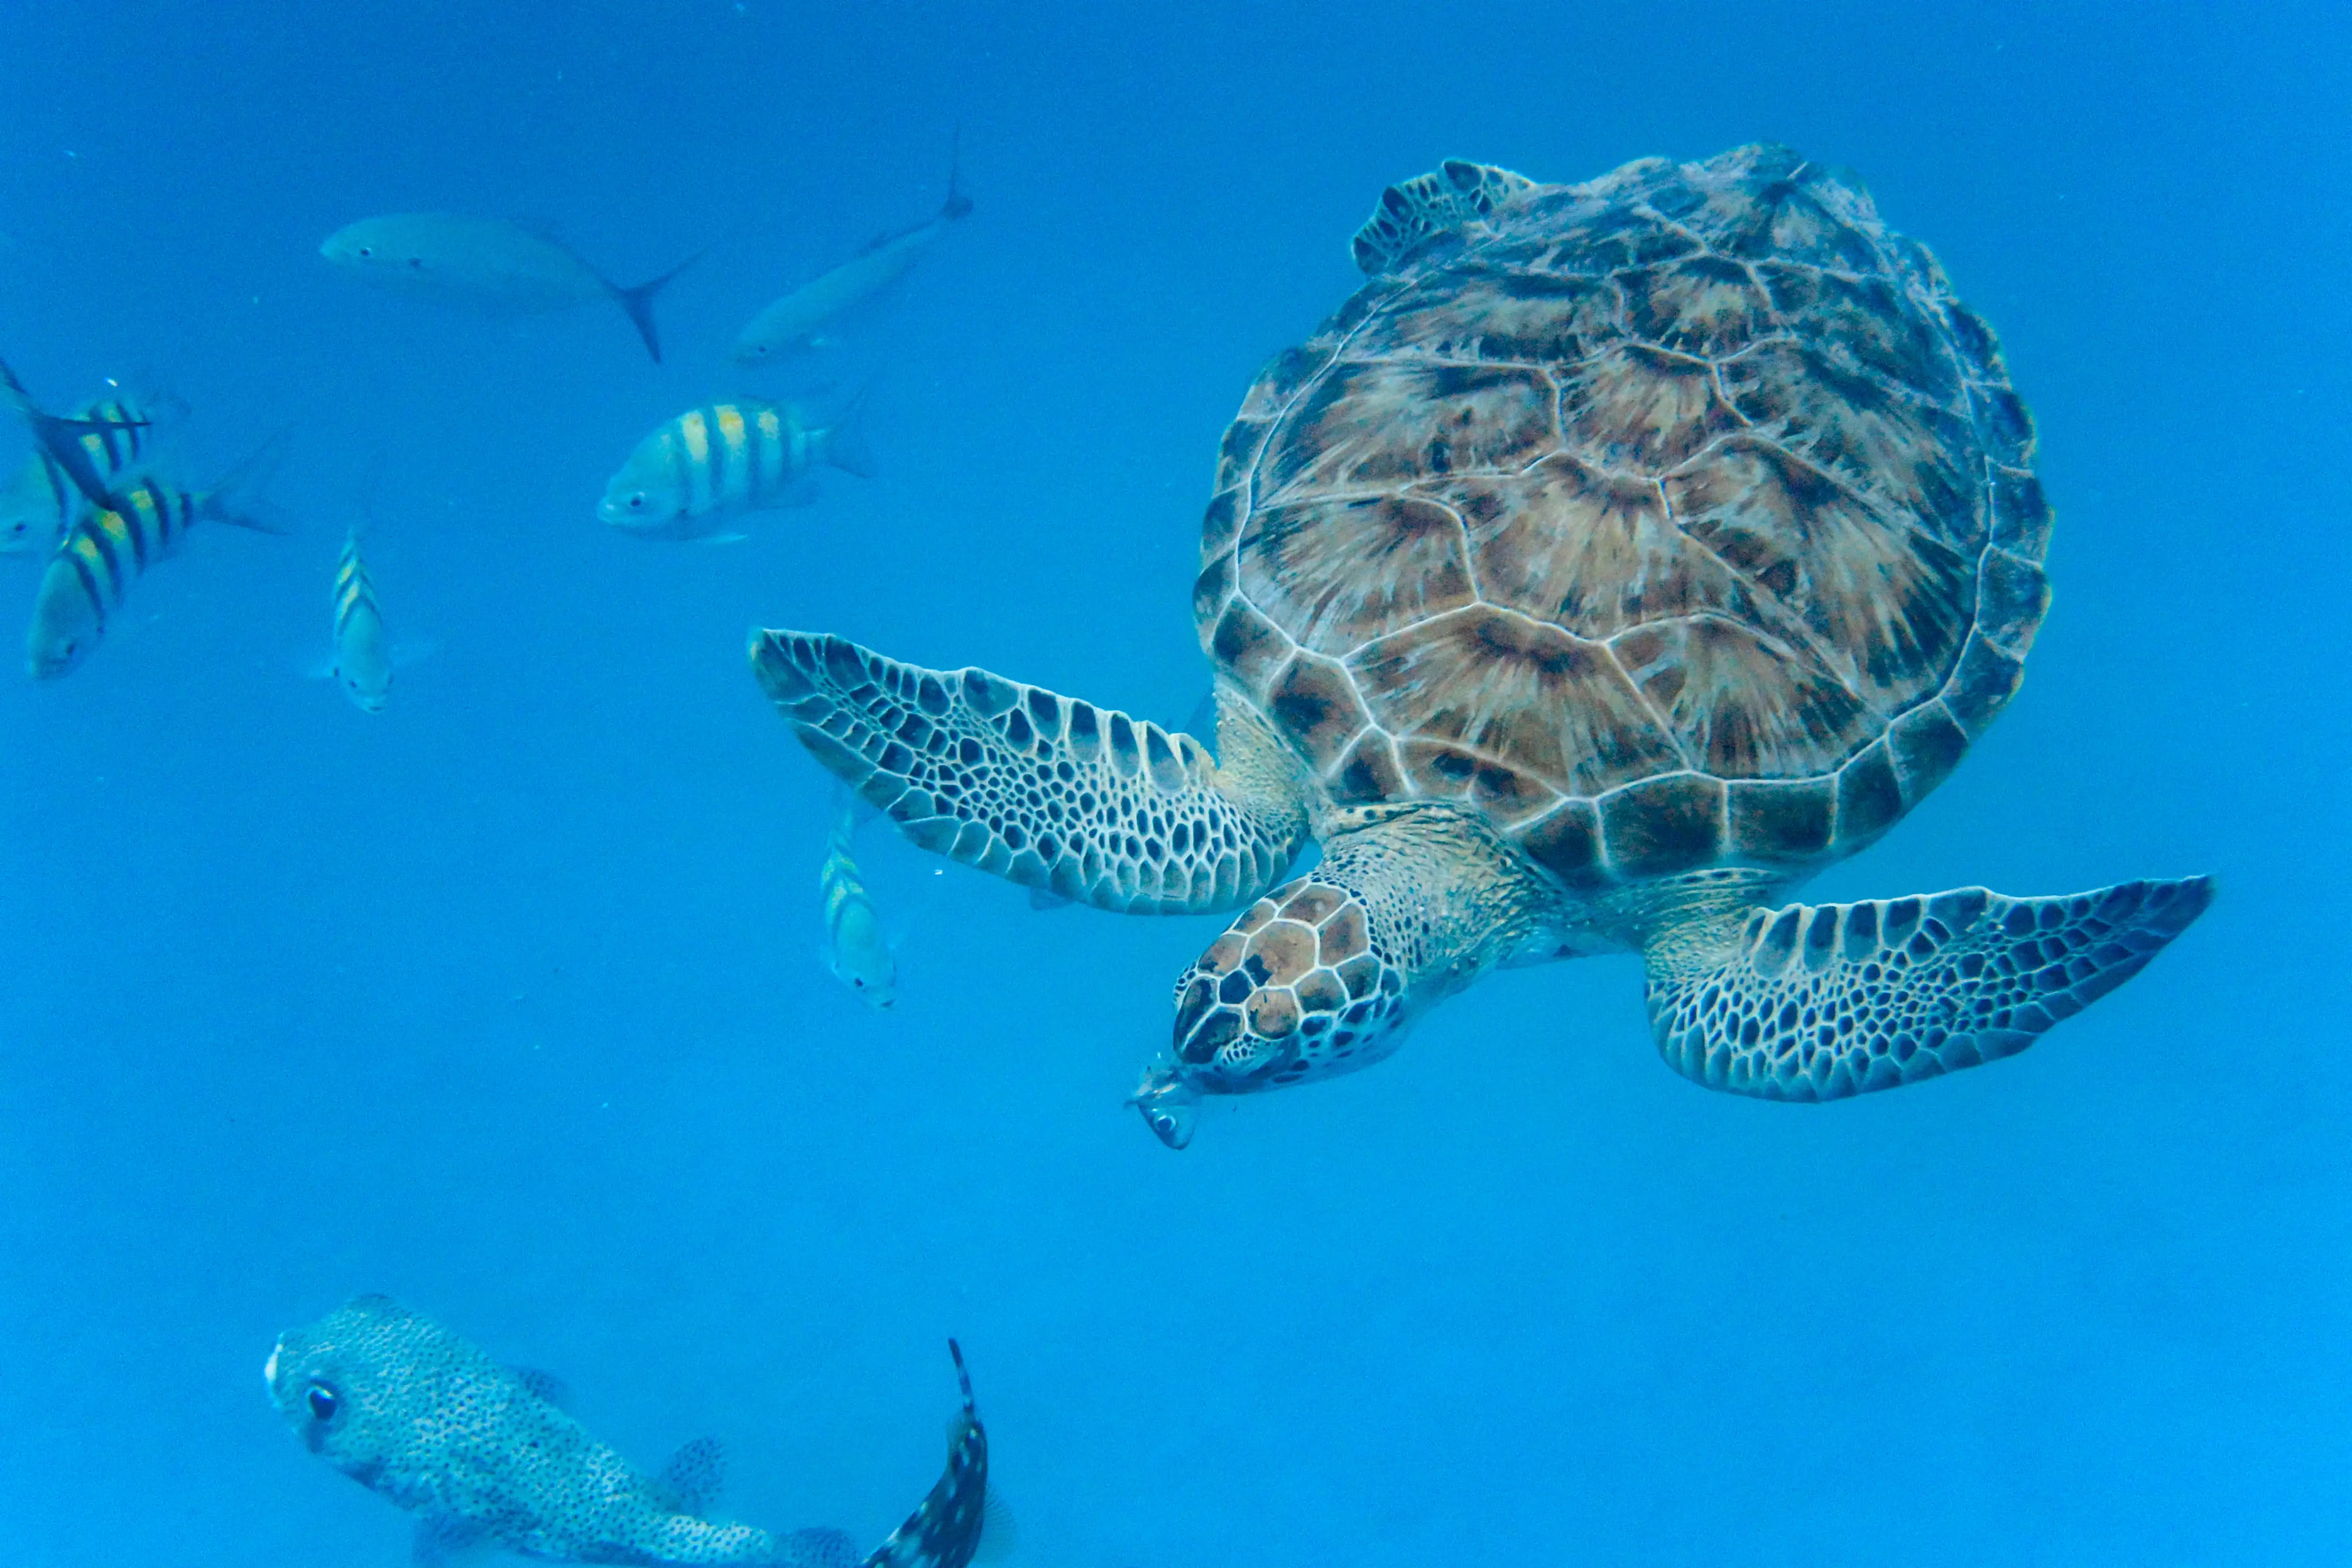 Underwater shot of a sea turtle feeding among fish